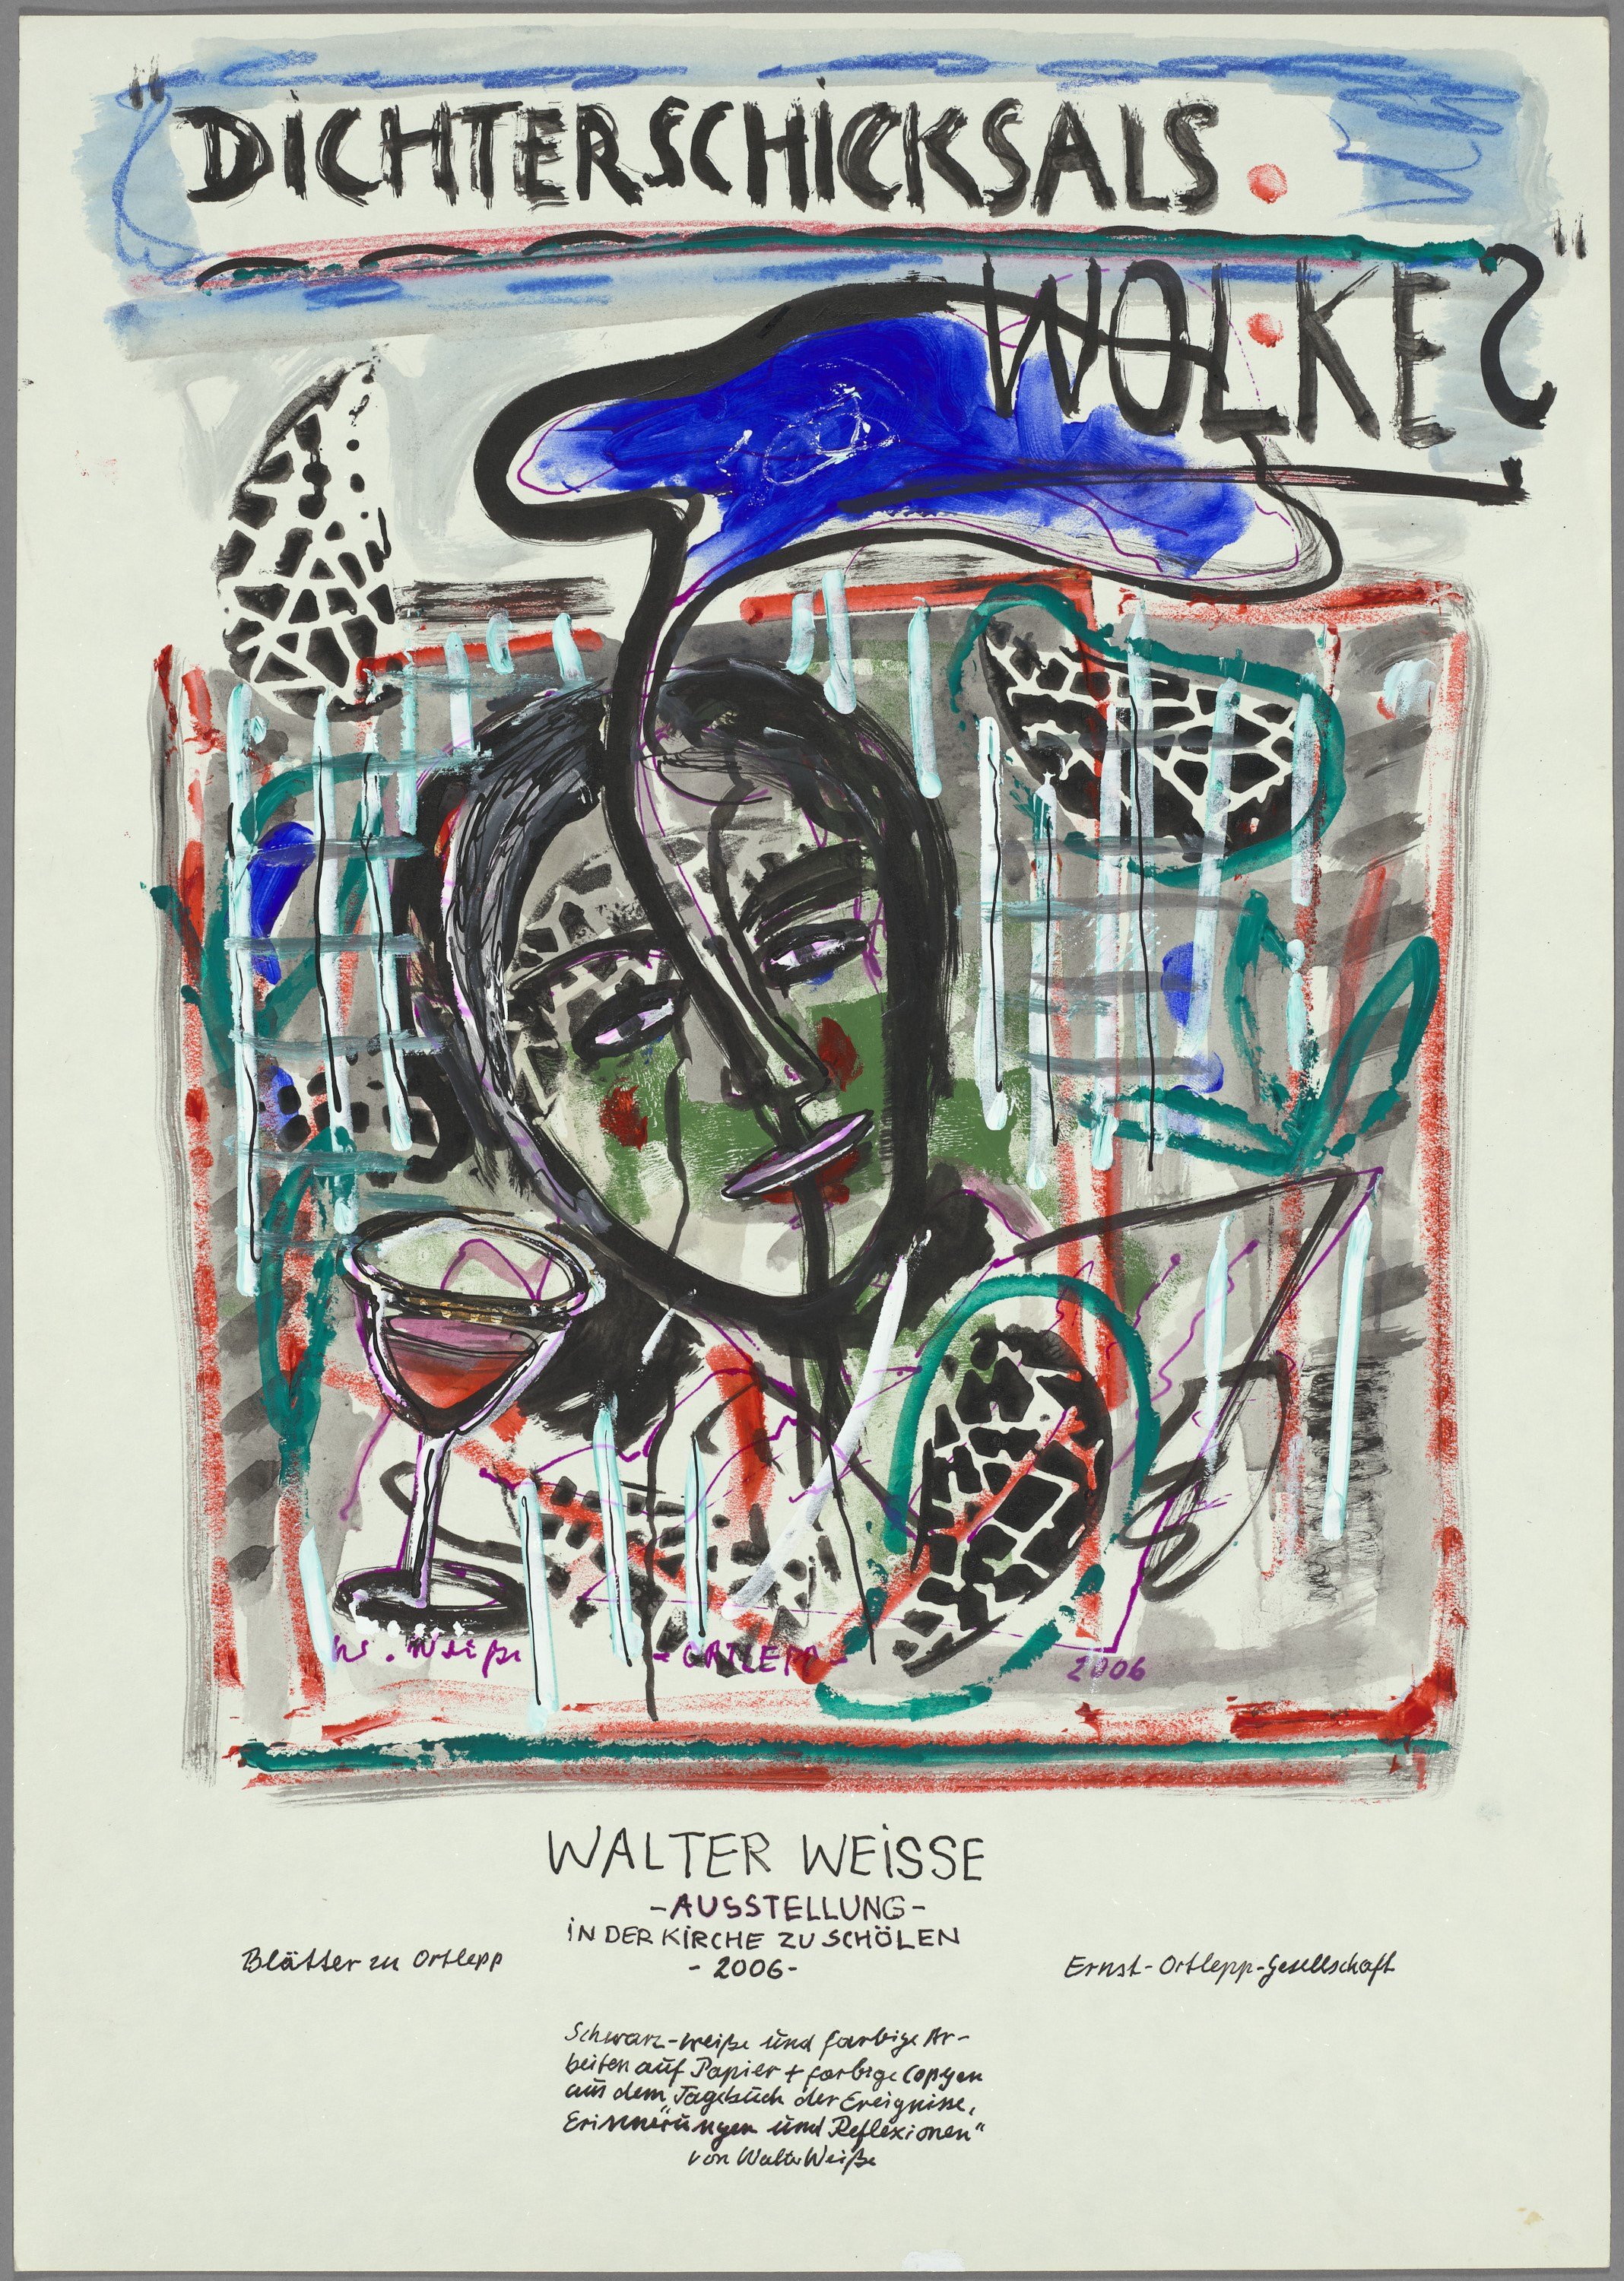 Dichterschicksals Wolke? – Walter Weisse (Kulturstiftung Sachsen-Anhalt CC BY-NC-SA)